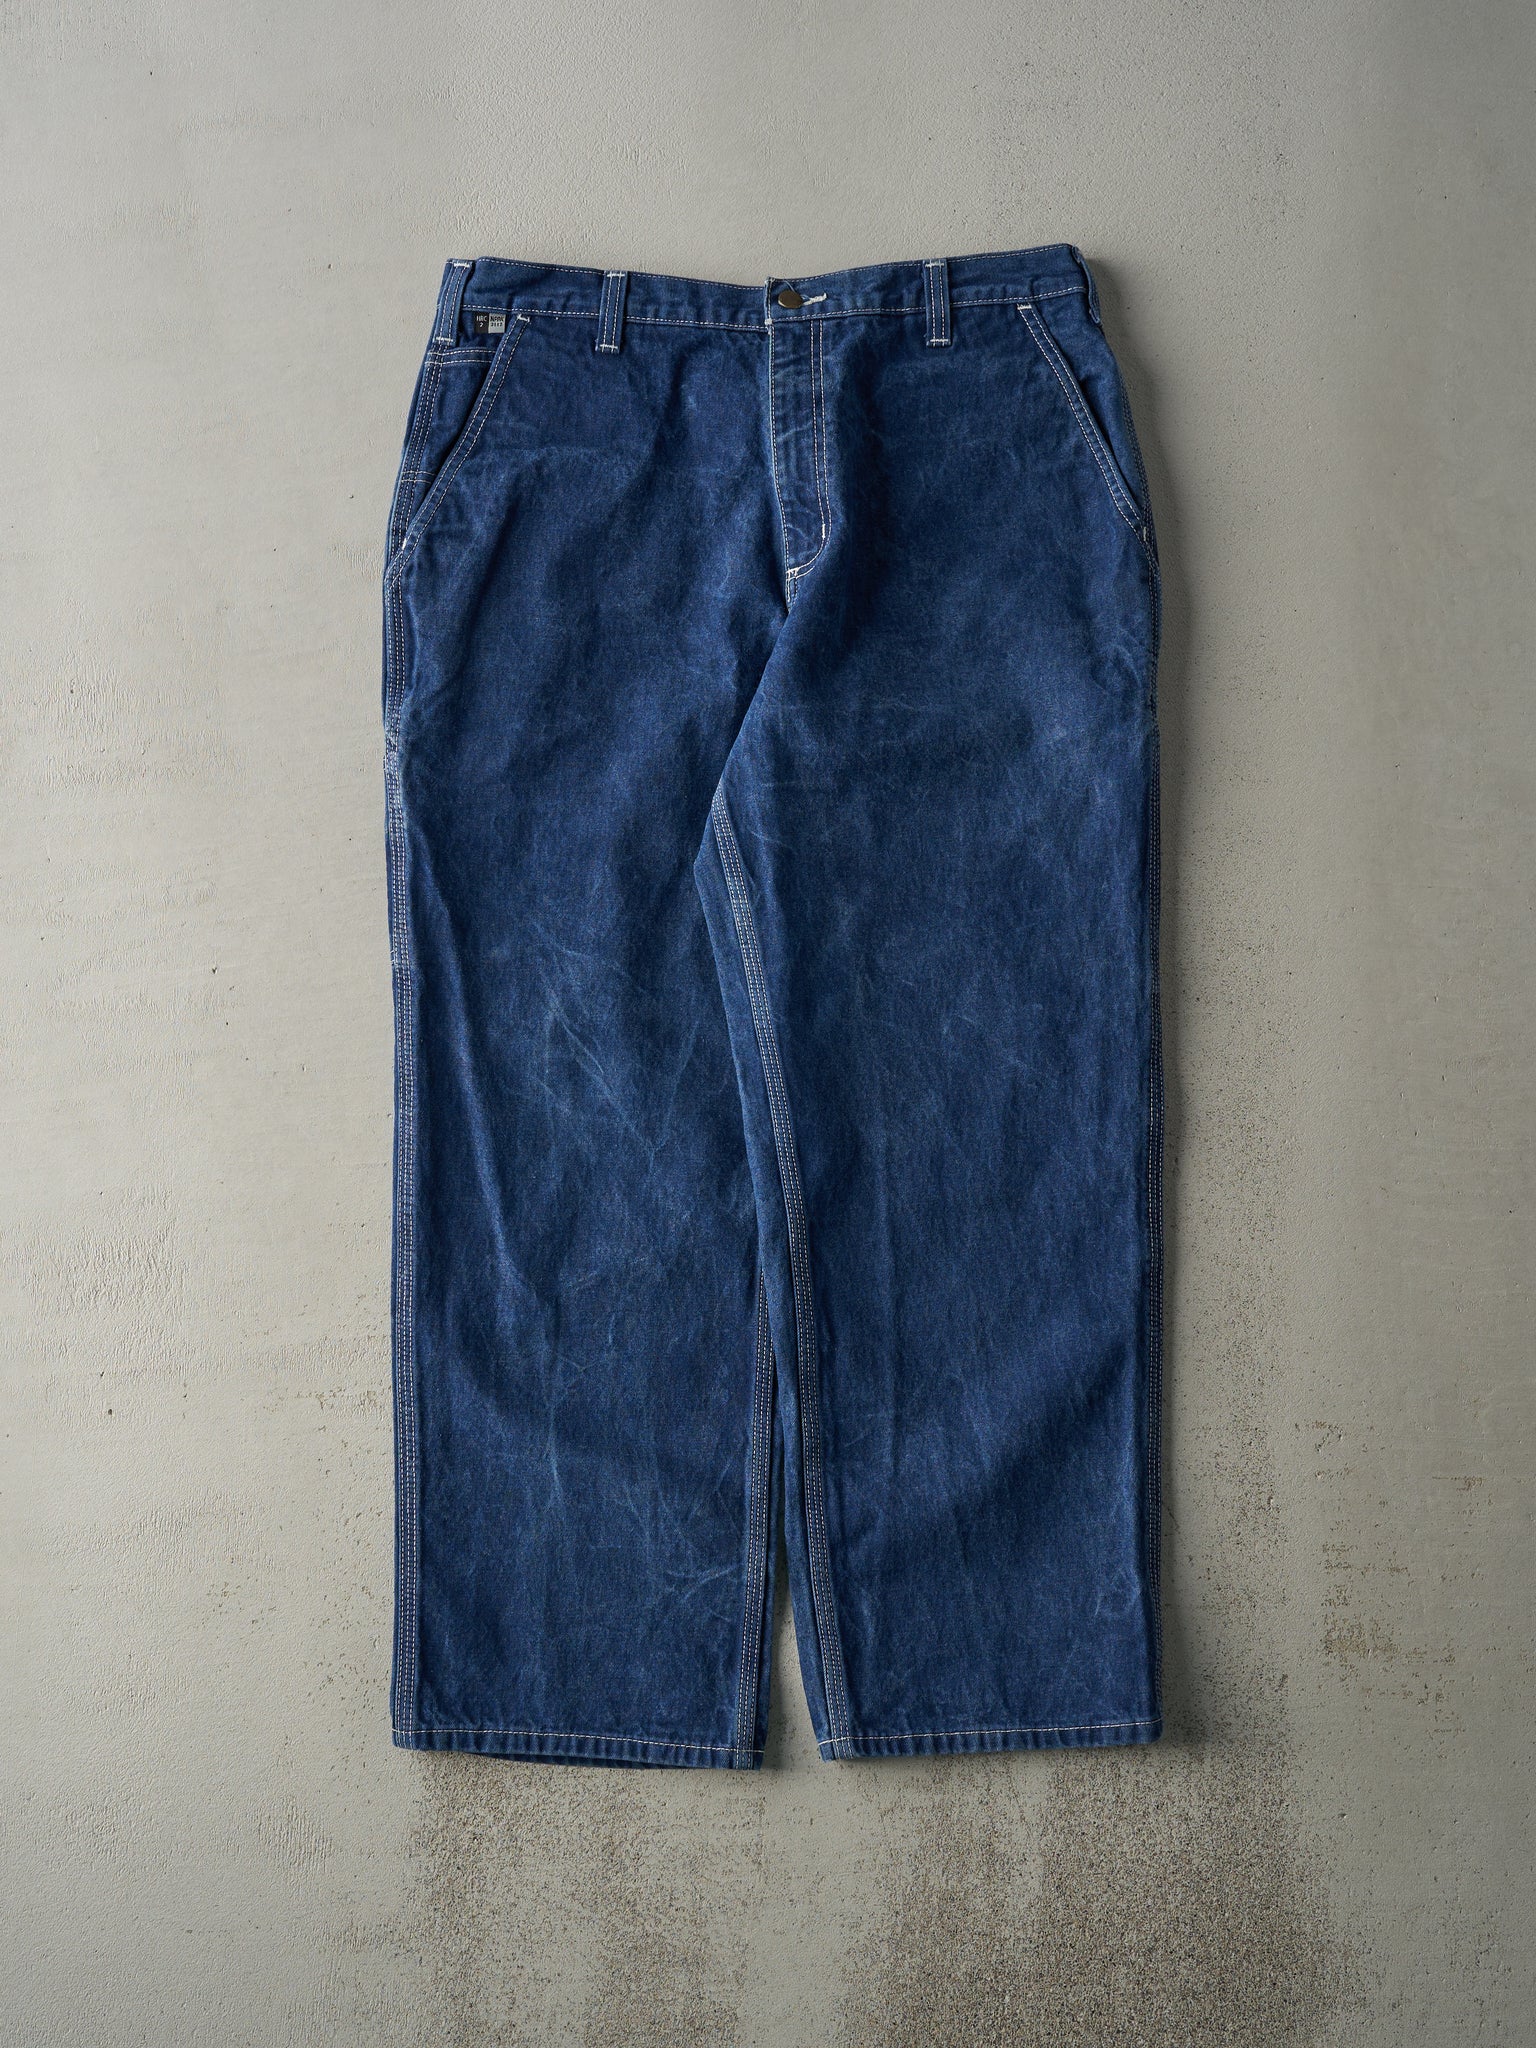 Vintage 90s Dark Wash Fire Resistant Carhartt Workwear Jeans (37x29.5)